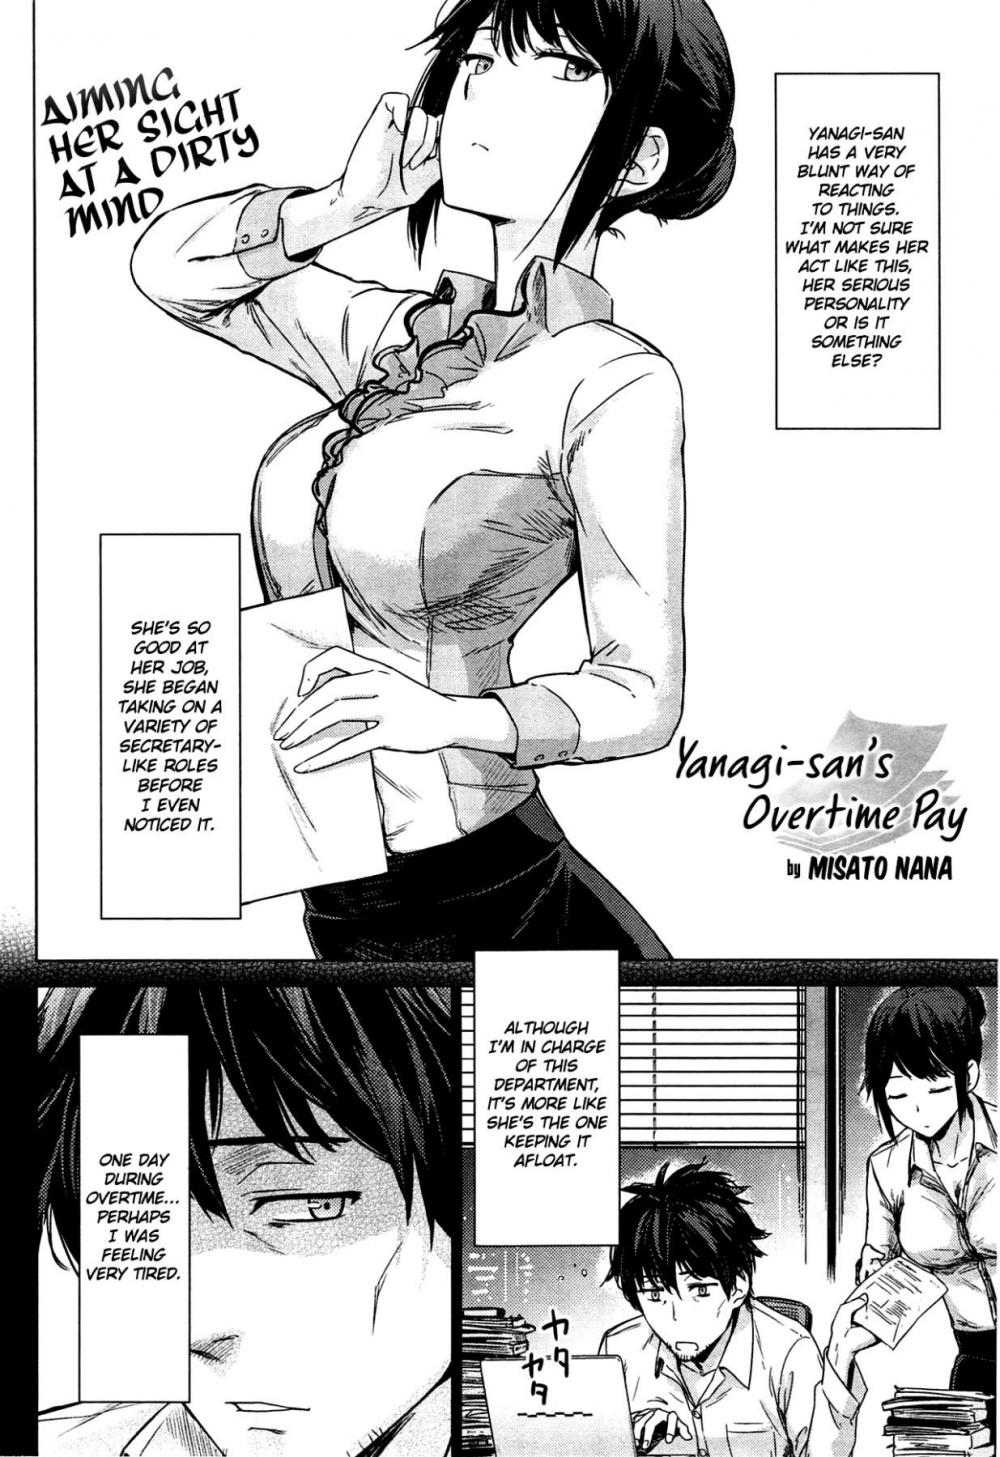 Hentai Manga Comic-Yanagi-san's Overtime Pay-Read-2